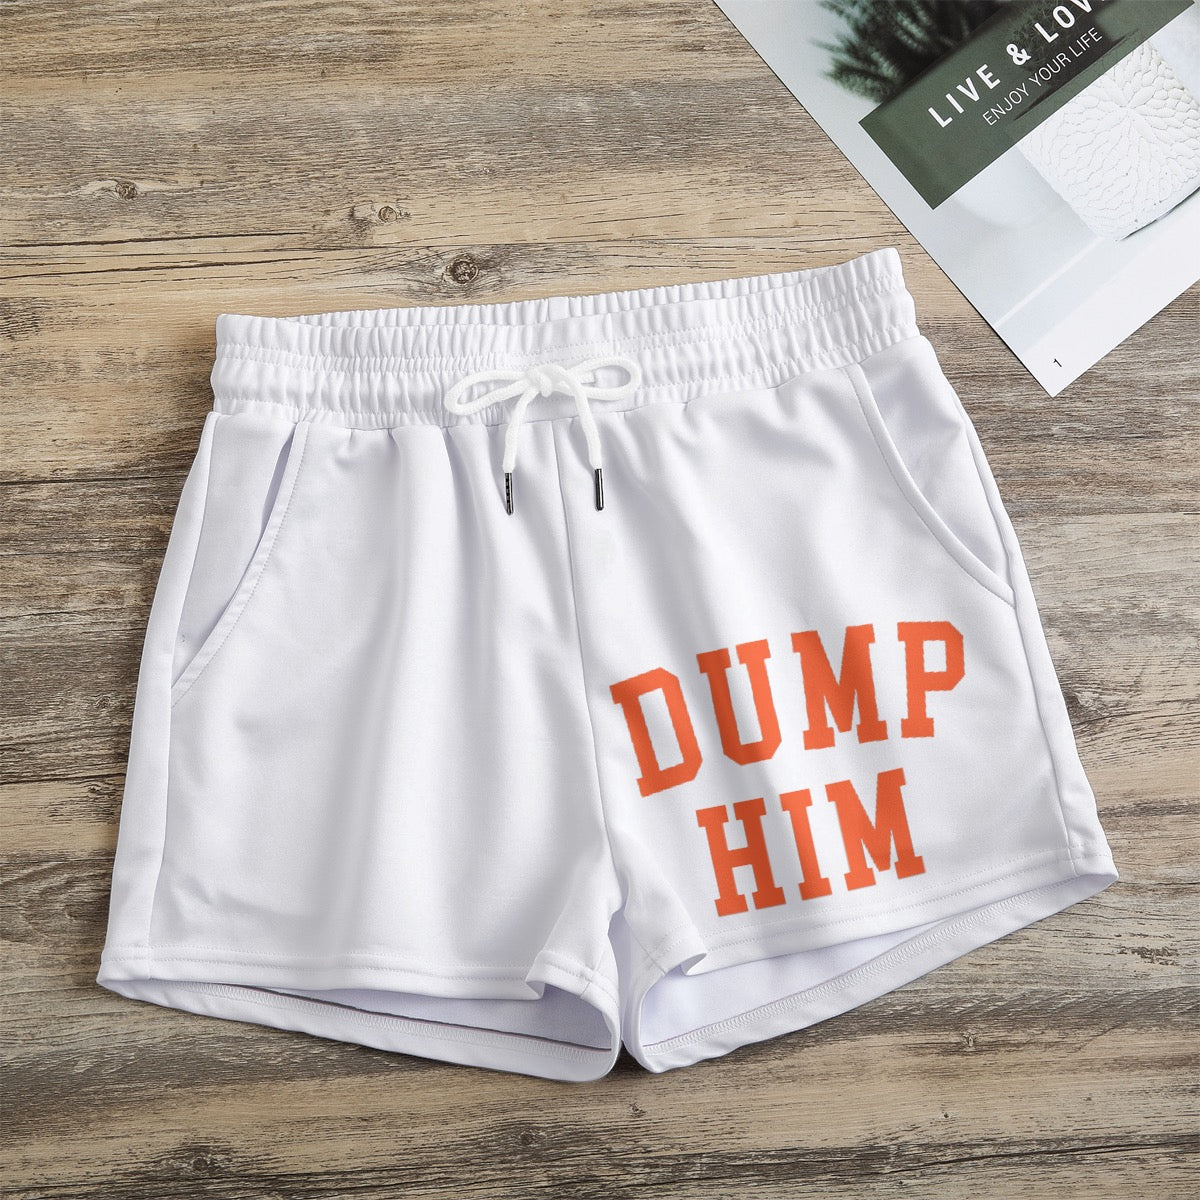 Dump him Print Women's Casual Shorts